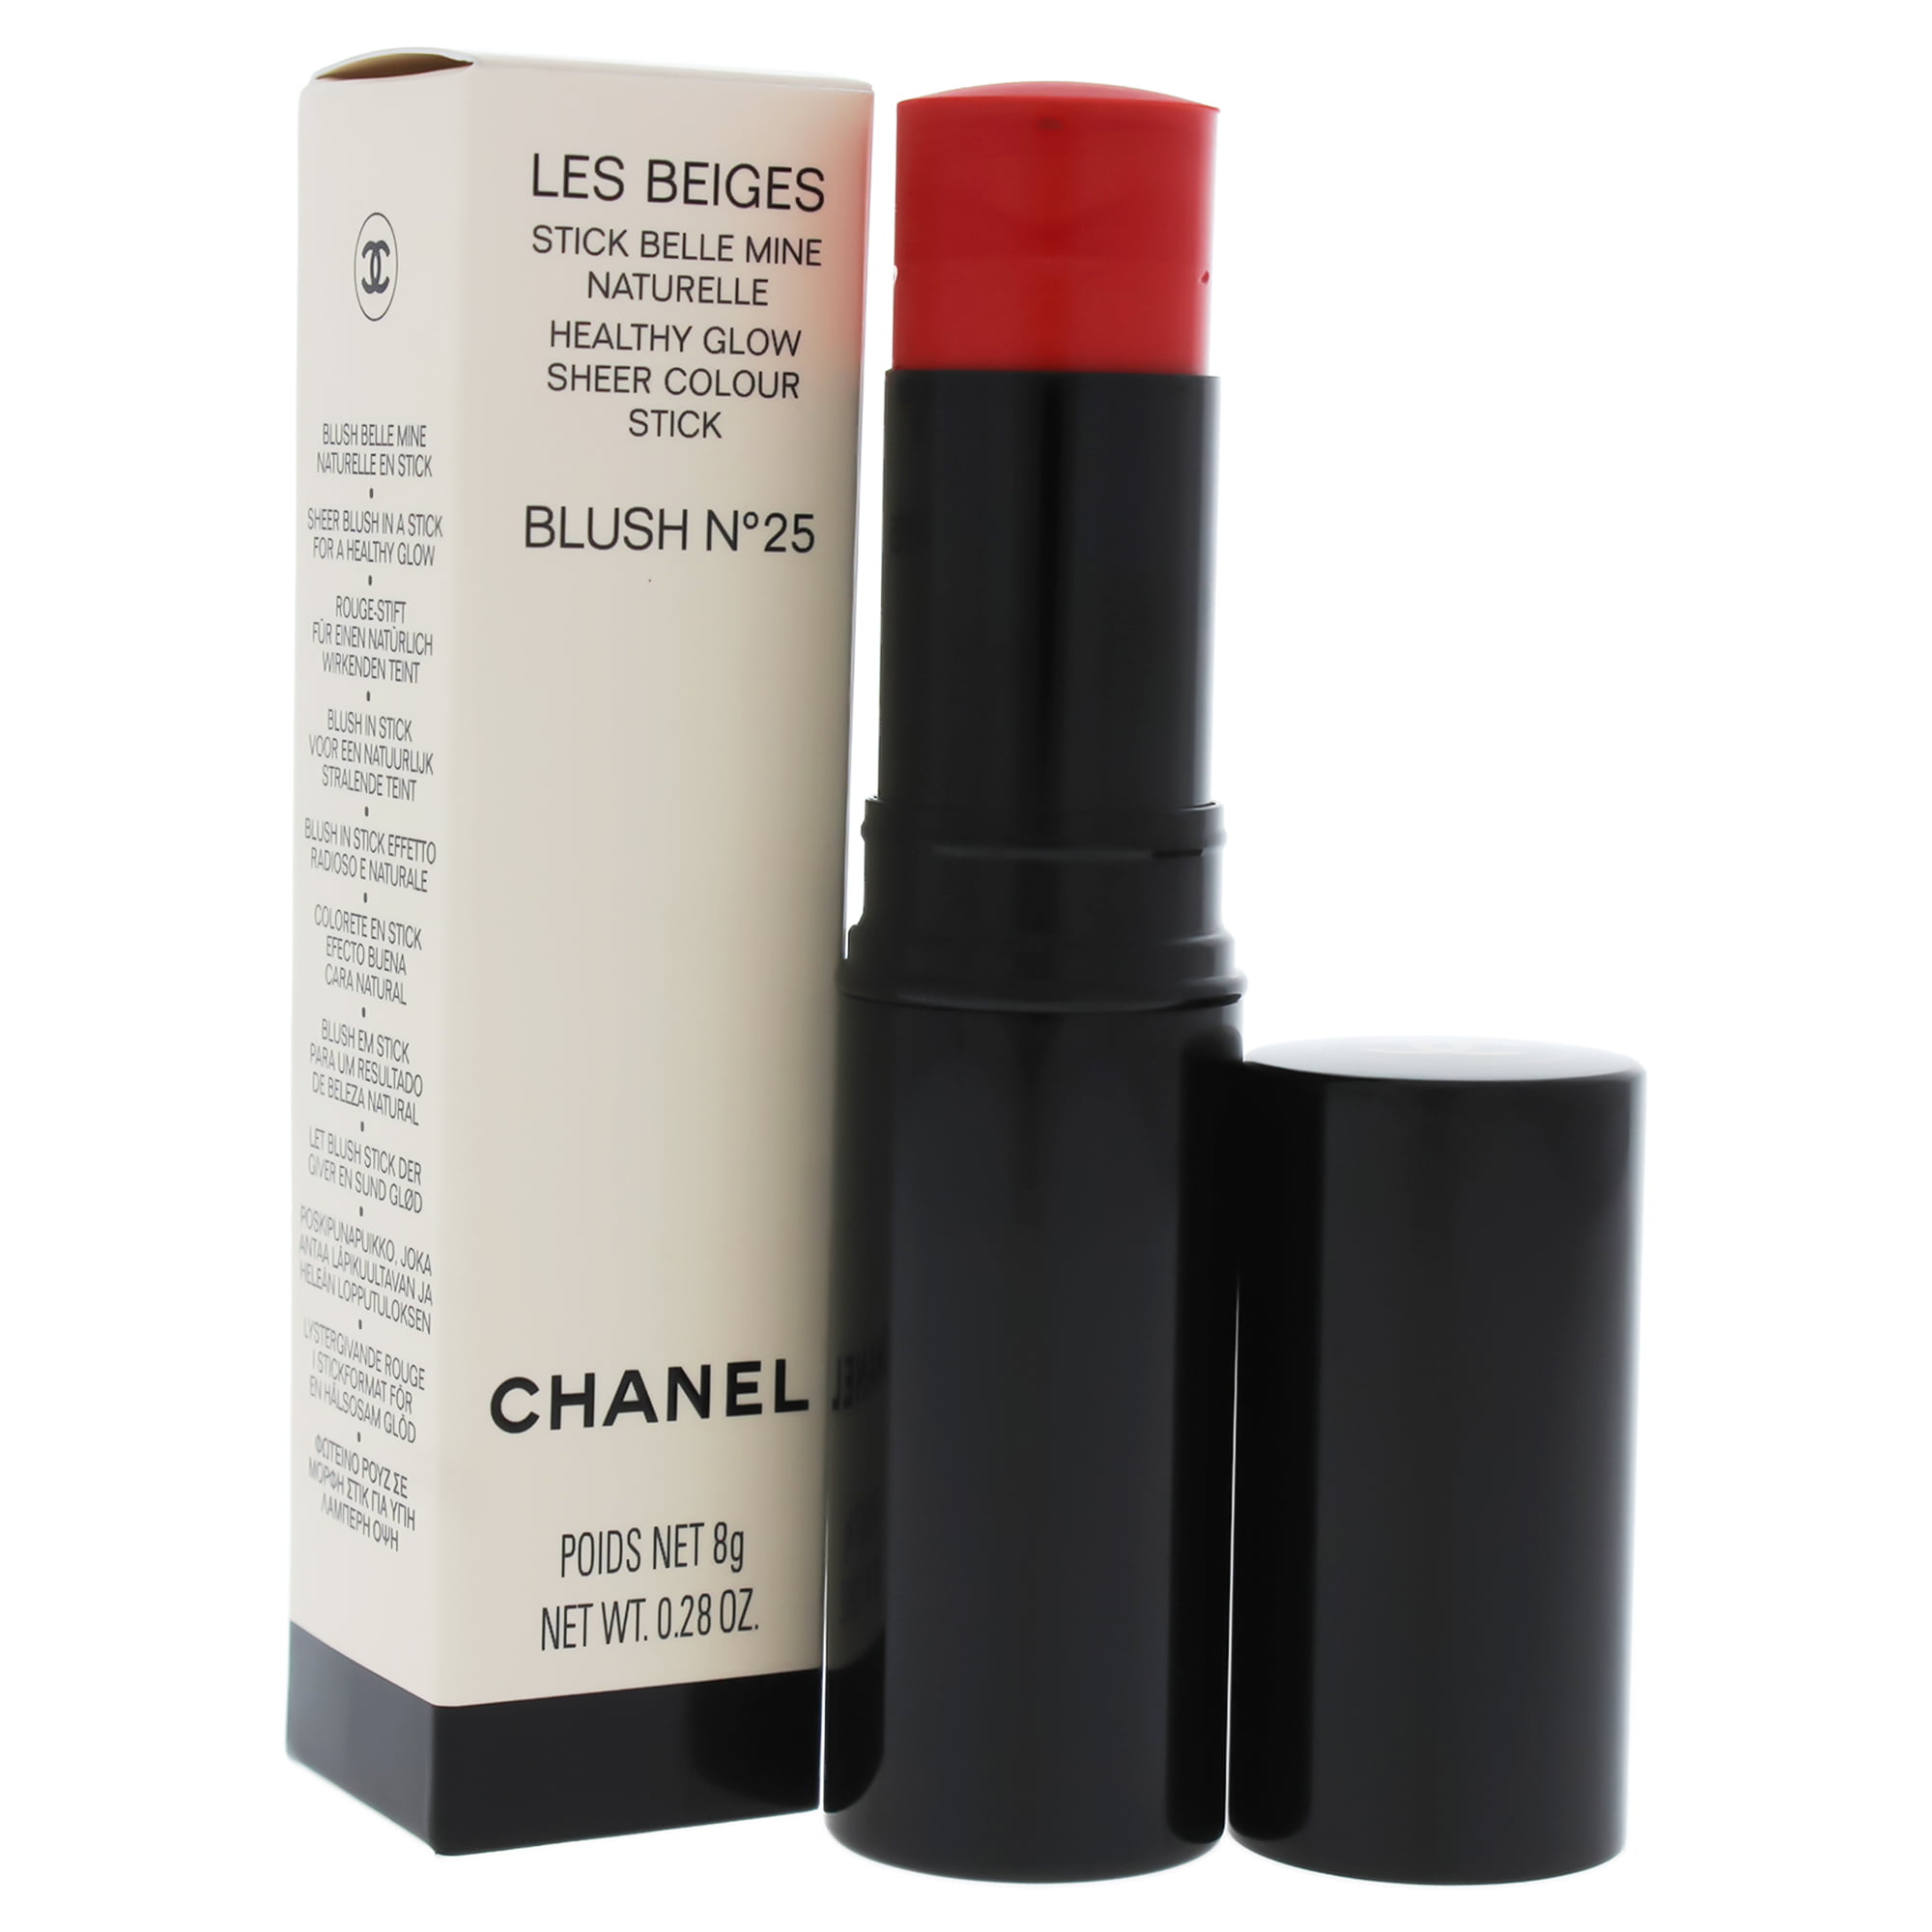 Les Beiges Healthy Glow Sheer Colour Stick Blush - 25 by Chanel for - 0.28 oz Blush - Walmart.com